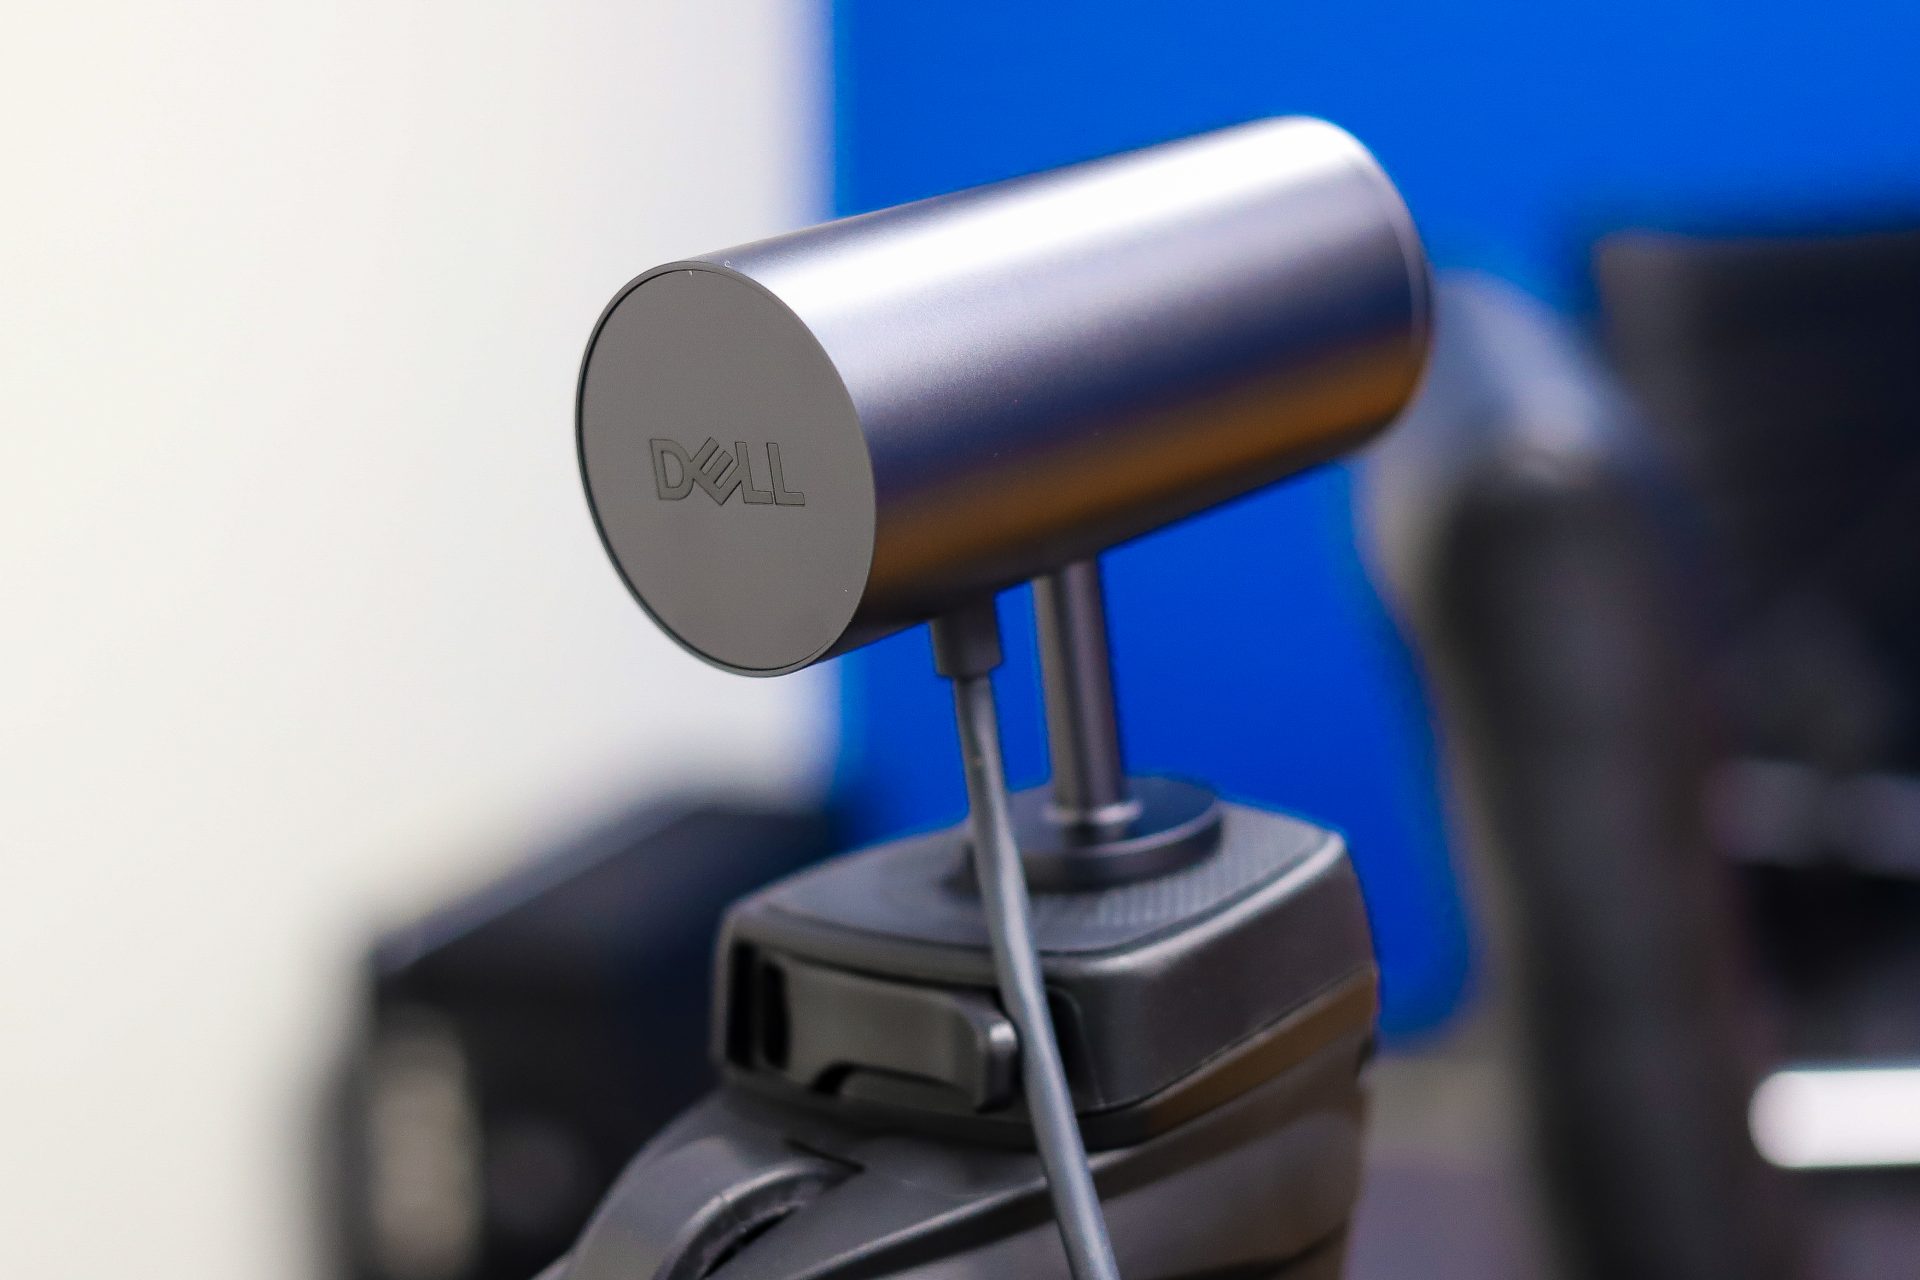 Dell UltraSharp Webcam tripod